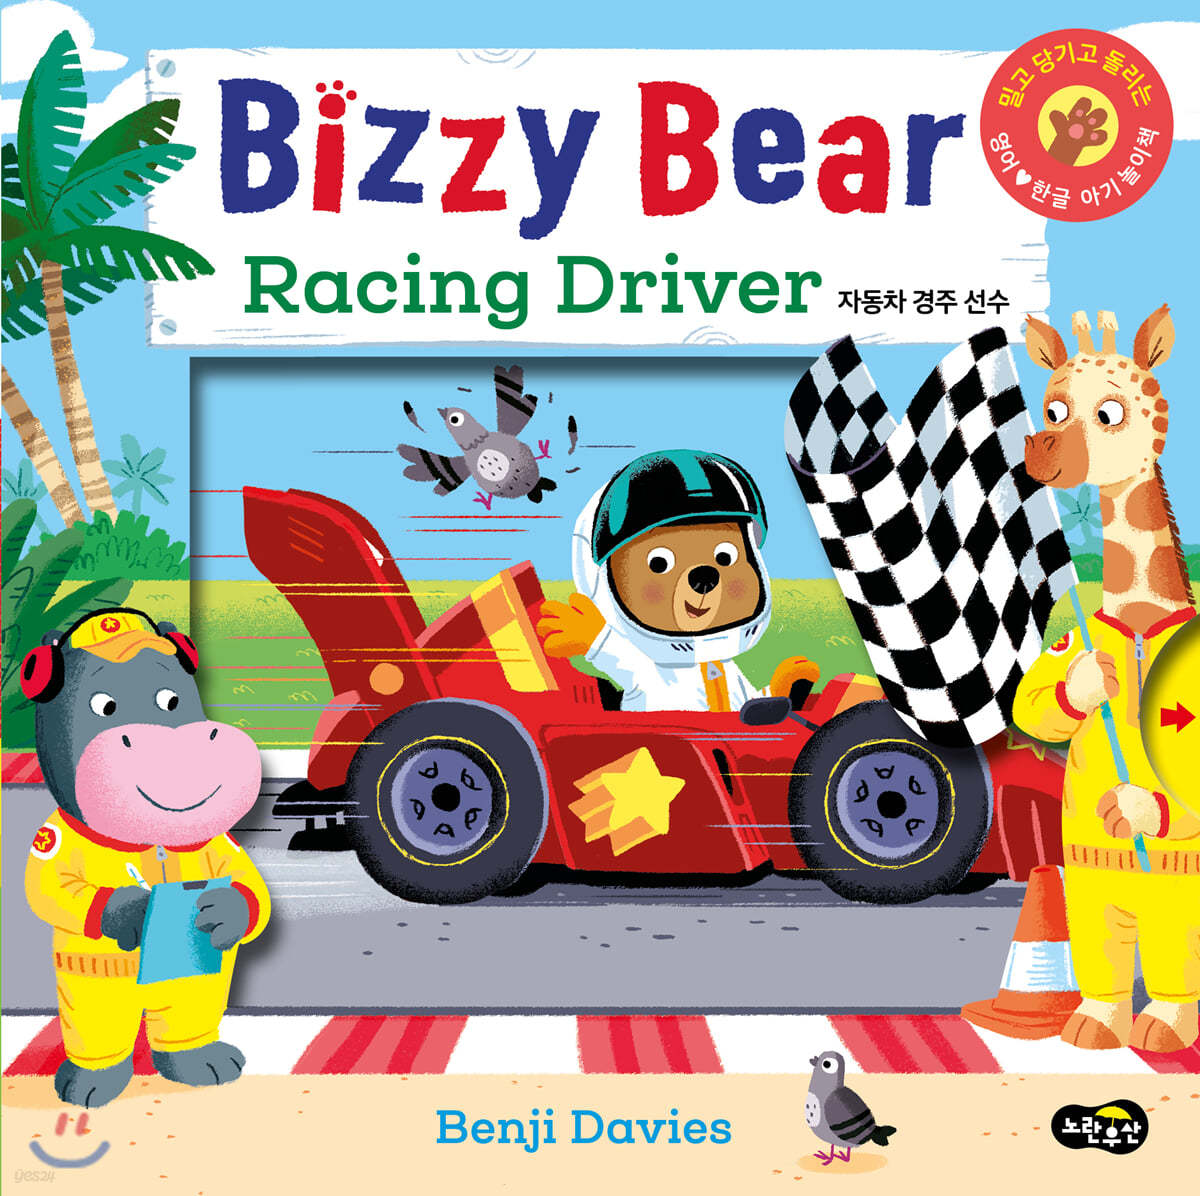 Bizzy Bear Racing Driver 자동차 경주 선수